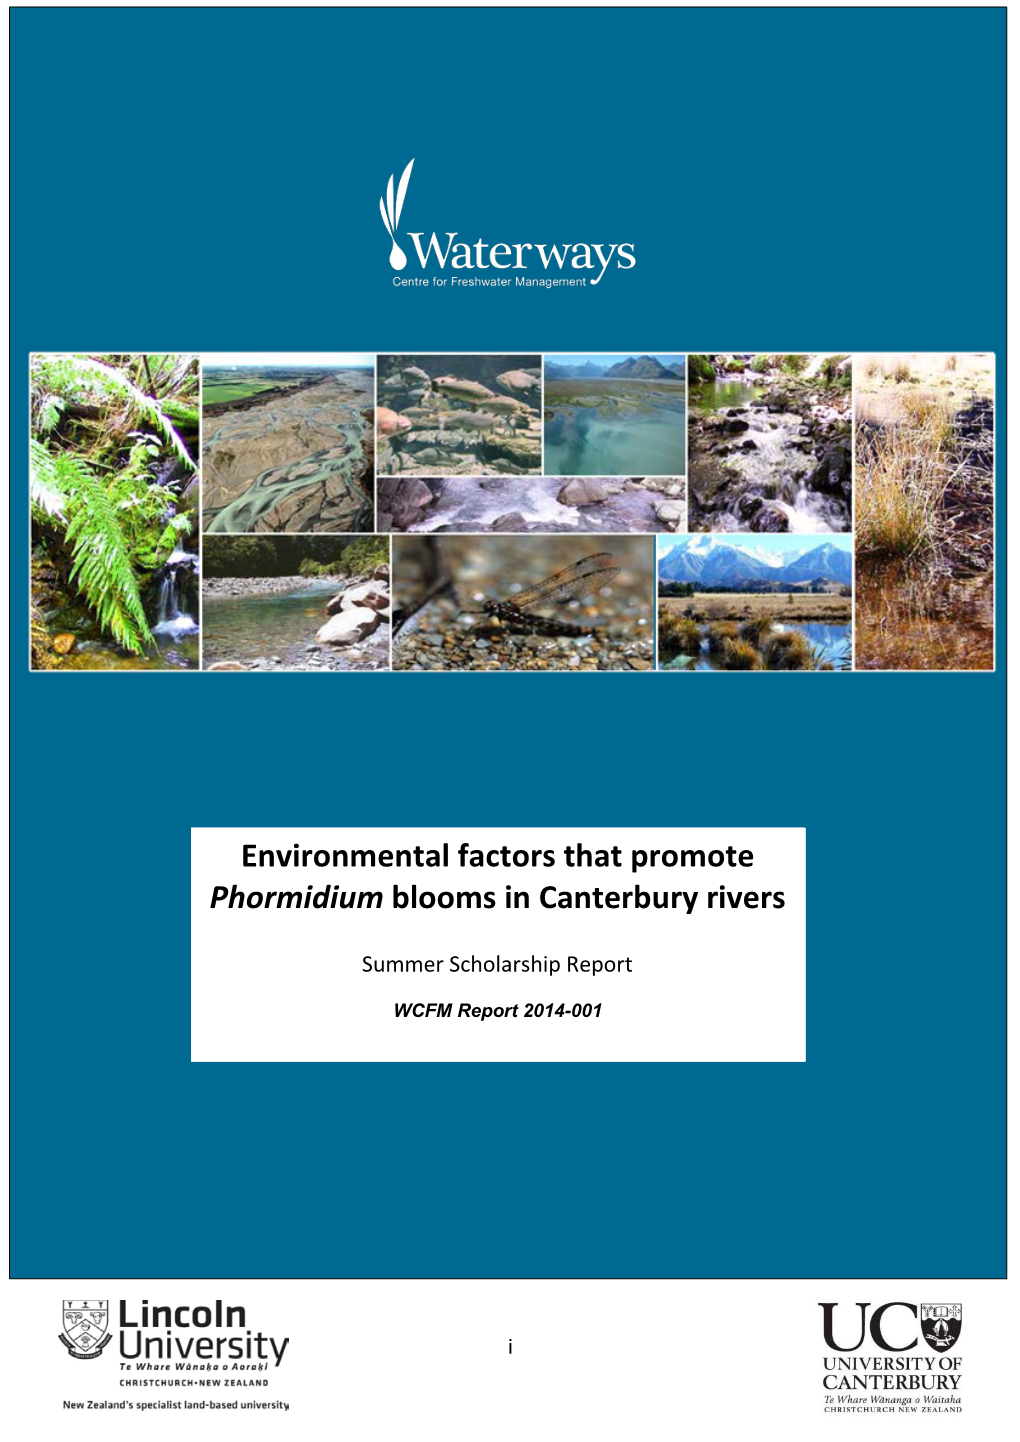 Environmental Factors That Promote Phormidium Blooms in Canterbury Rivers